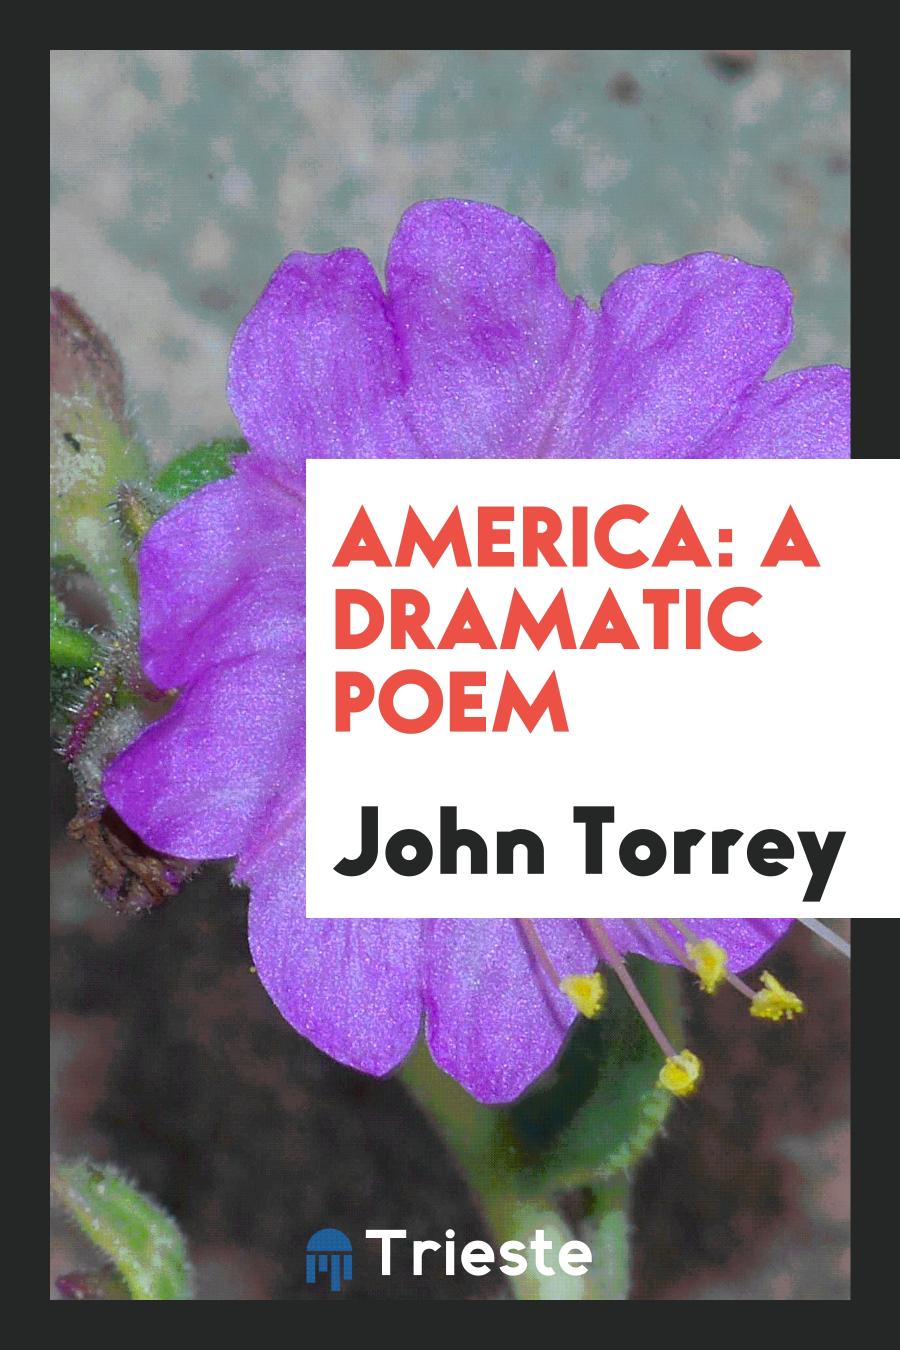 America: A Dramatic Poem